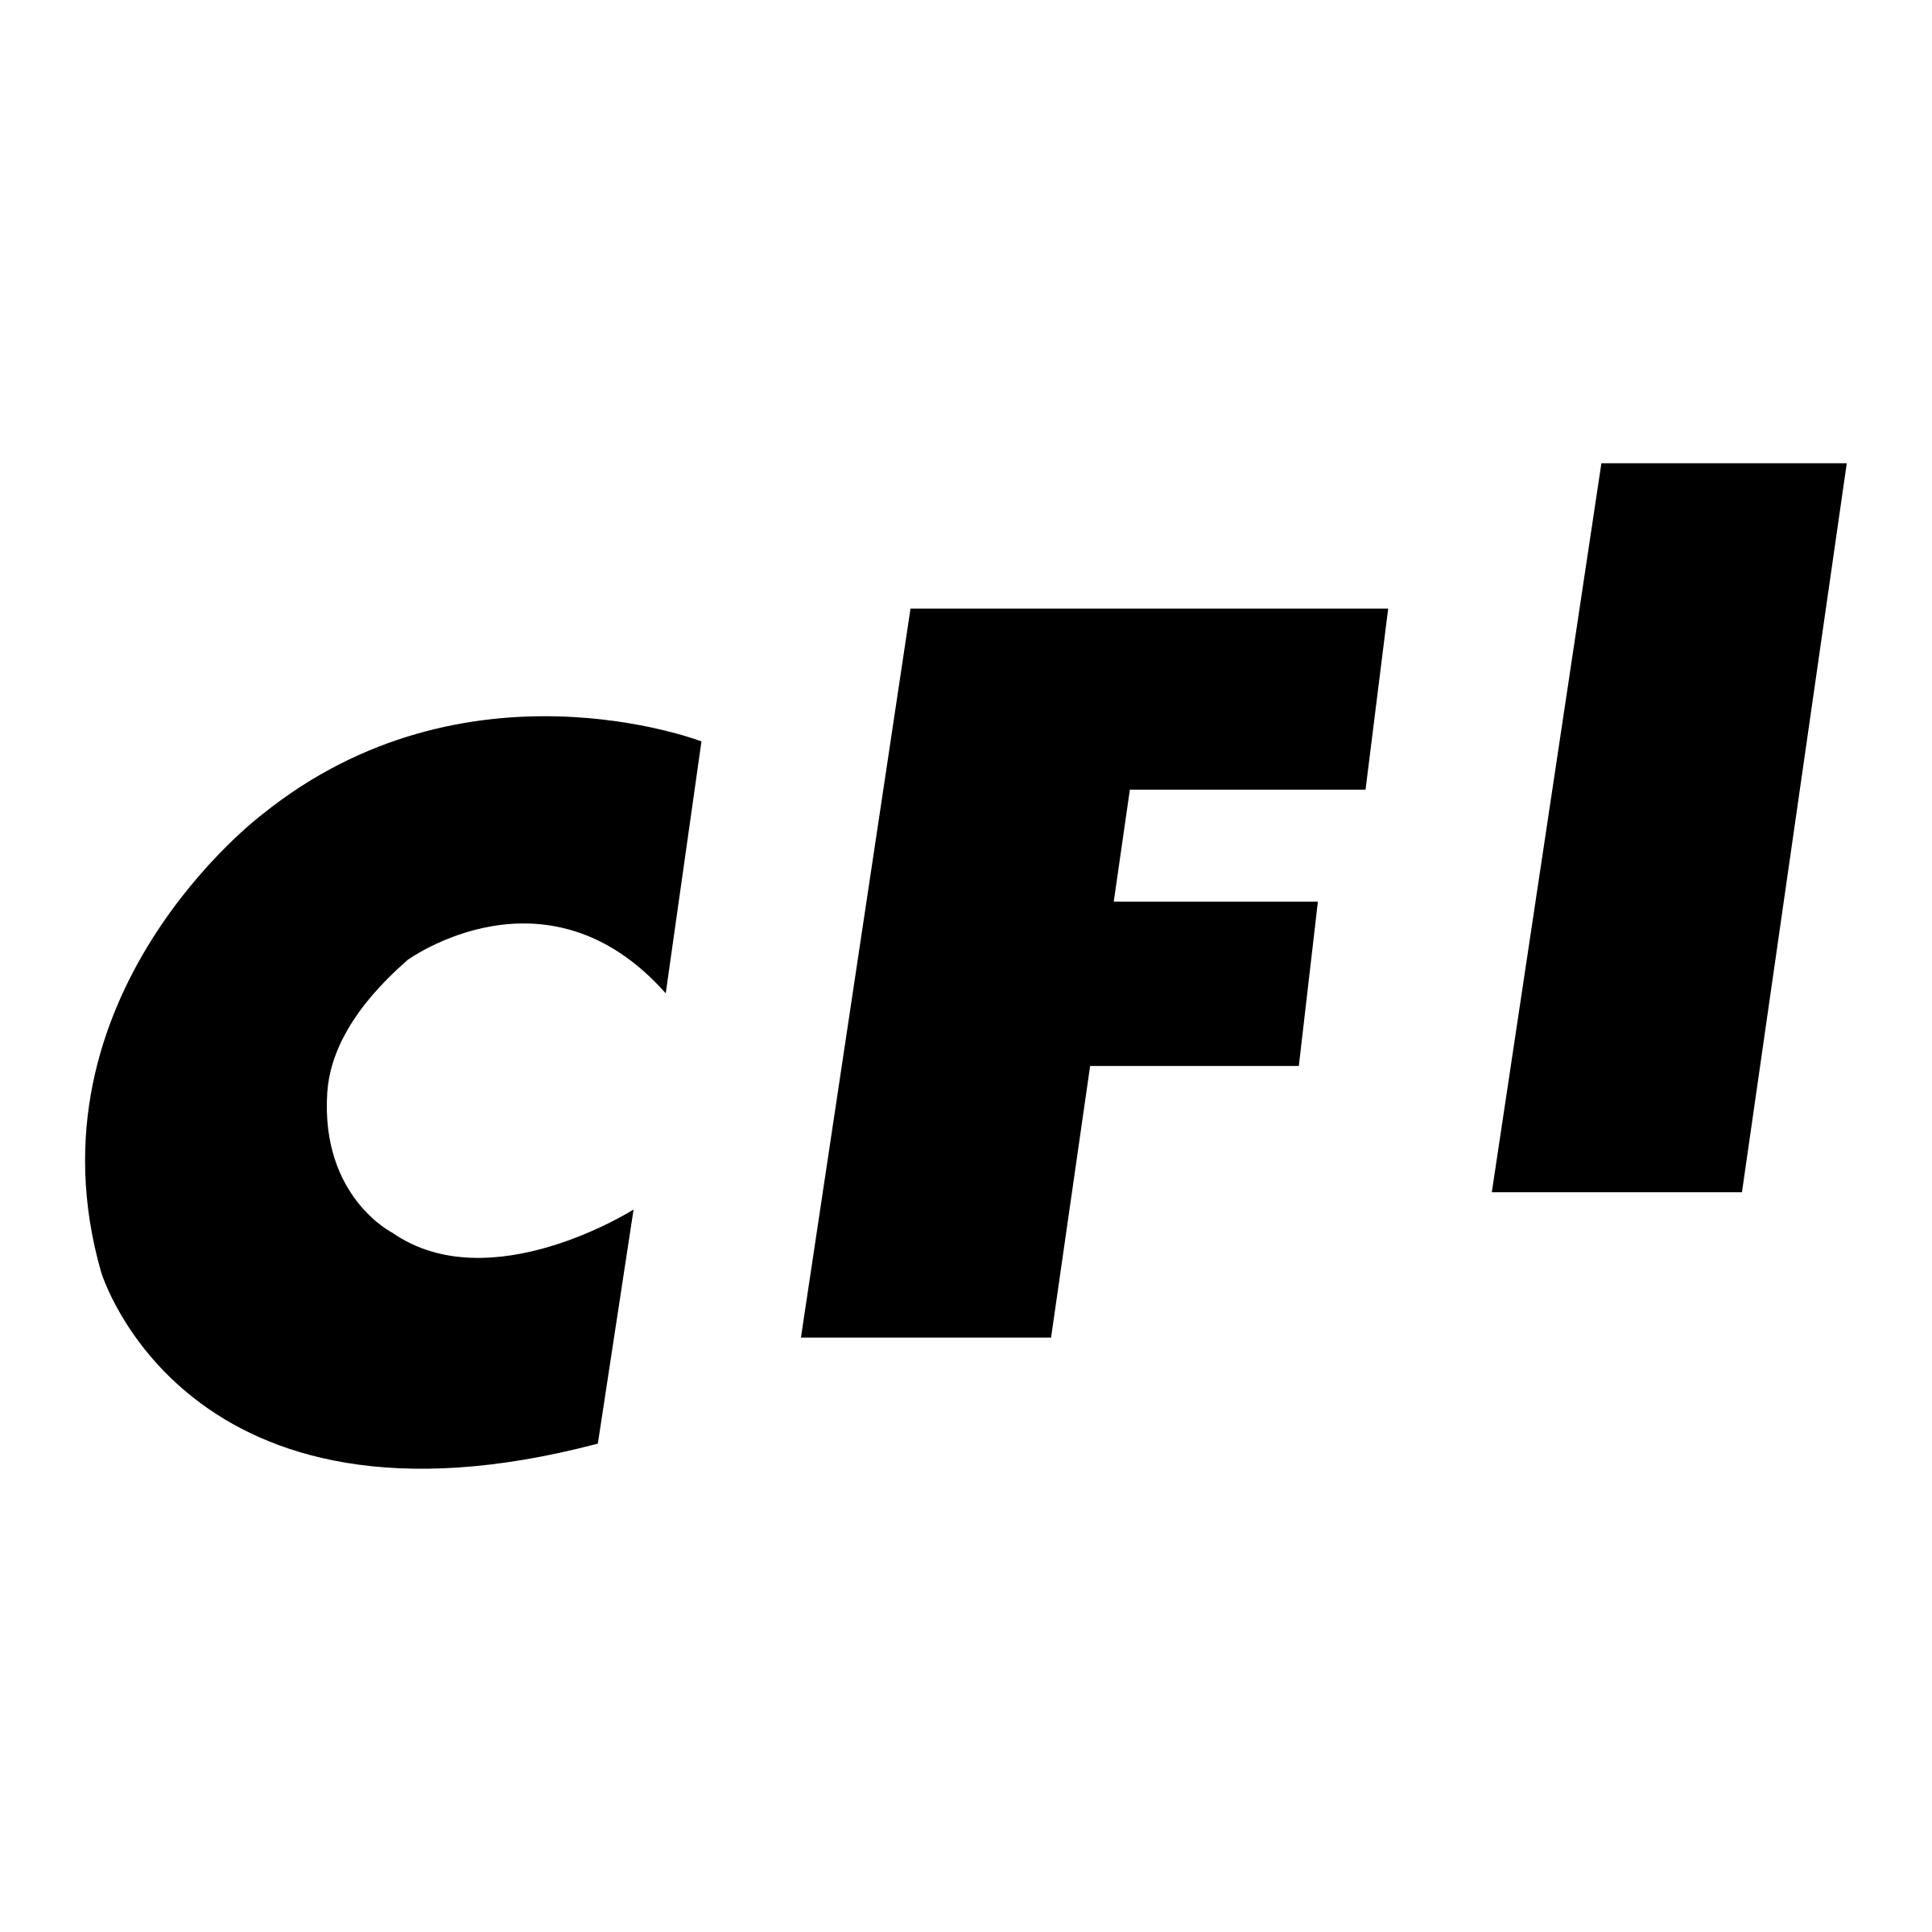 CFI Logo - CFI Logo PNG Transparent & SVG Vector - Freebie Supply